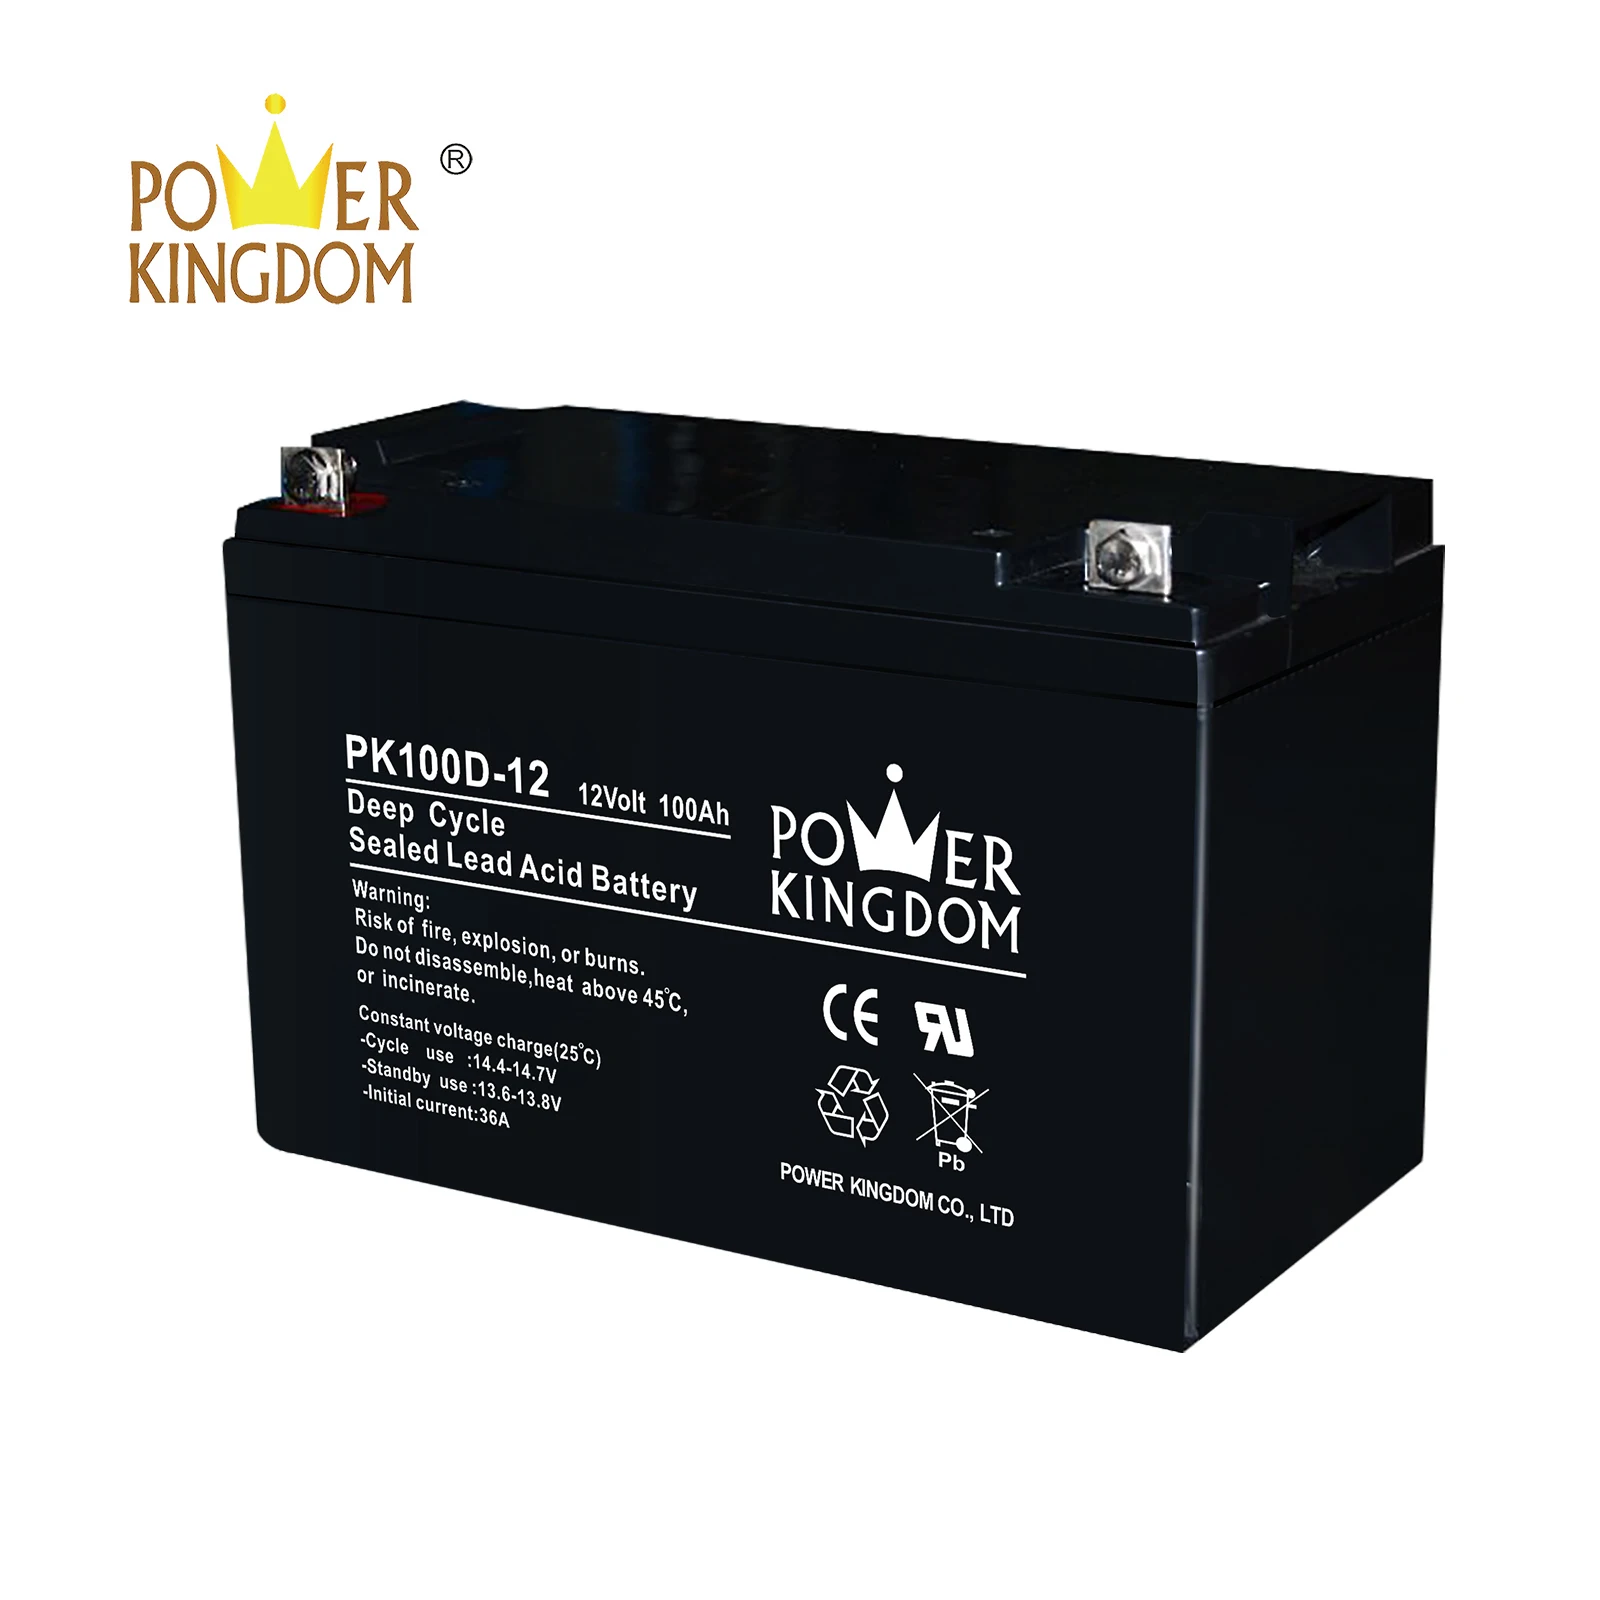 Power Kingdom cycle 120ah agm battery company